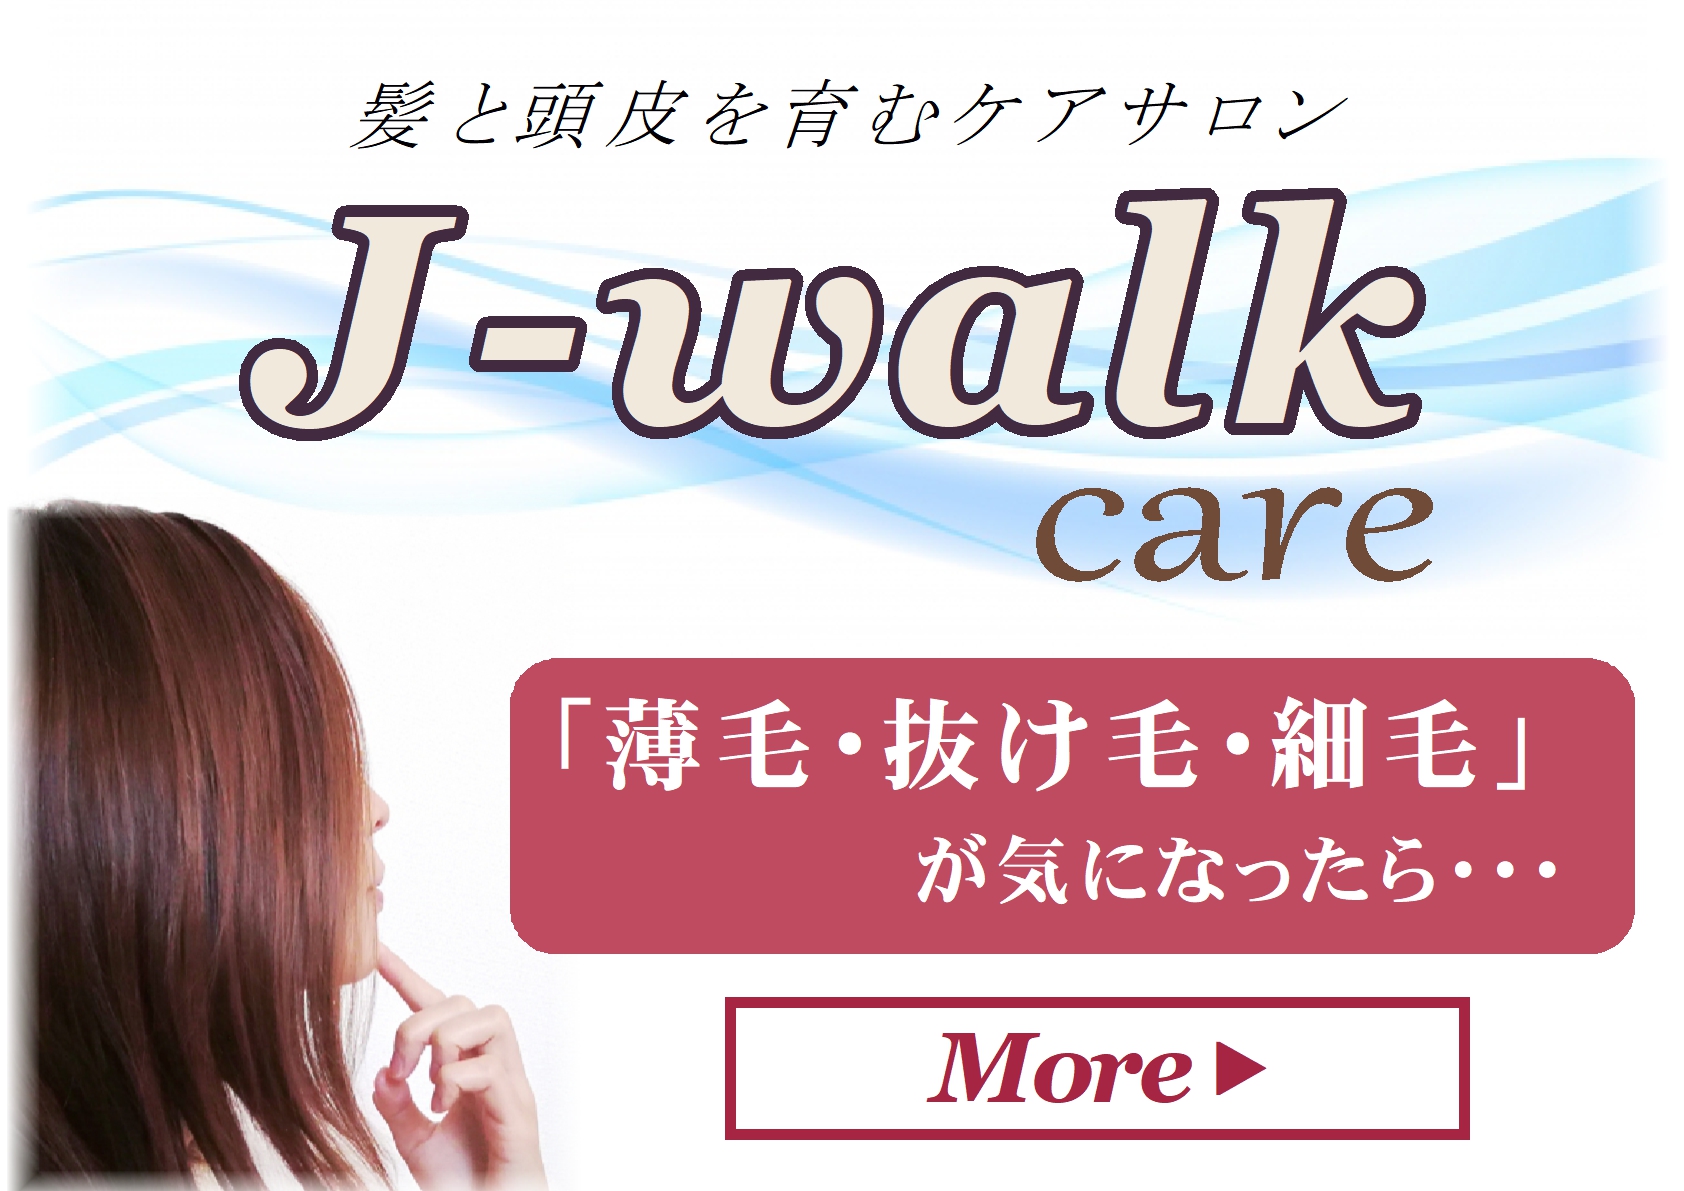 jwalk-careサイト